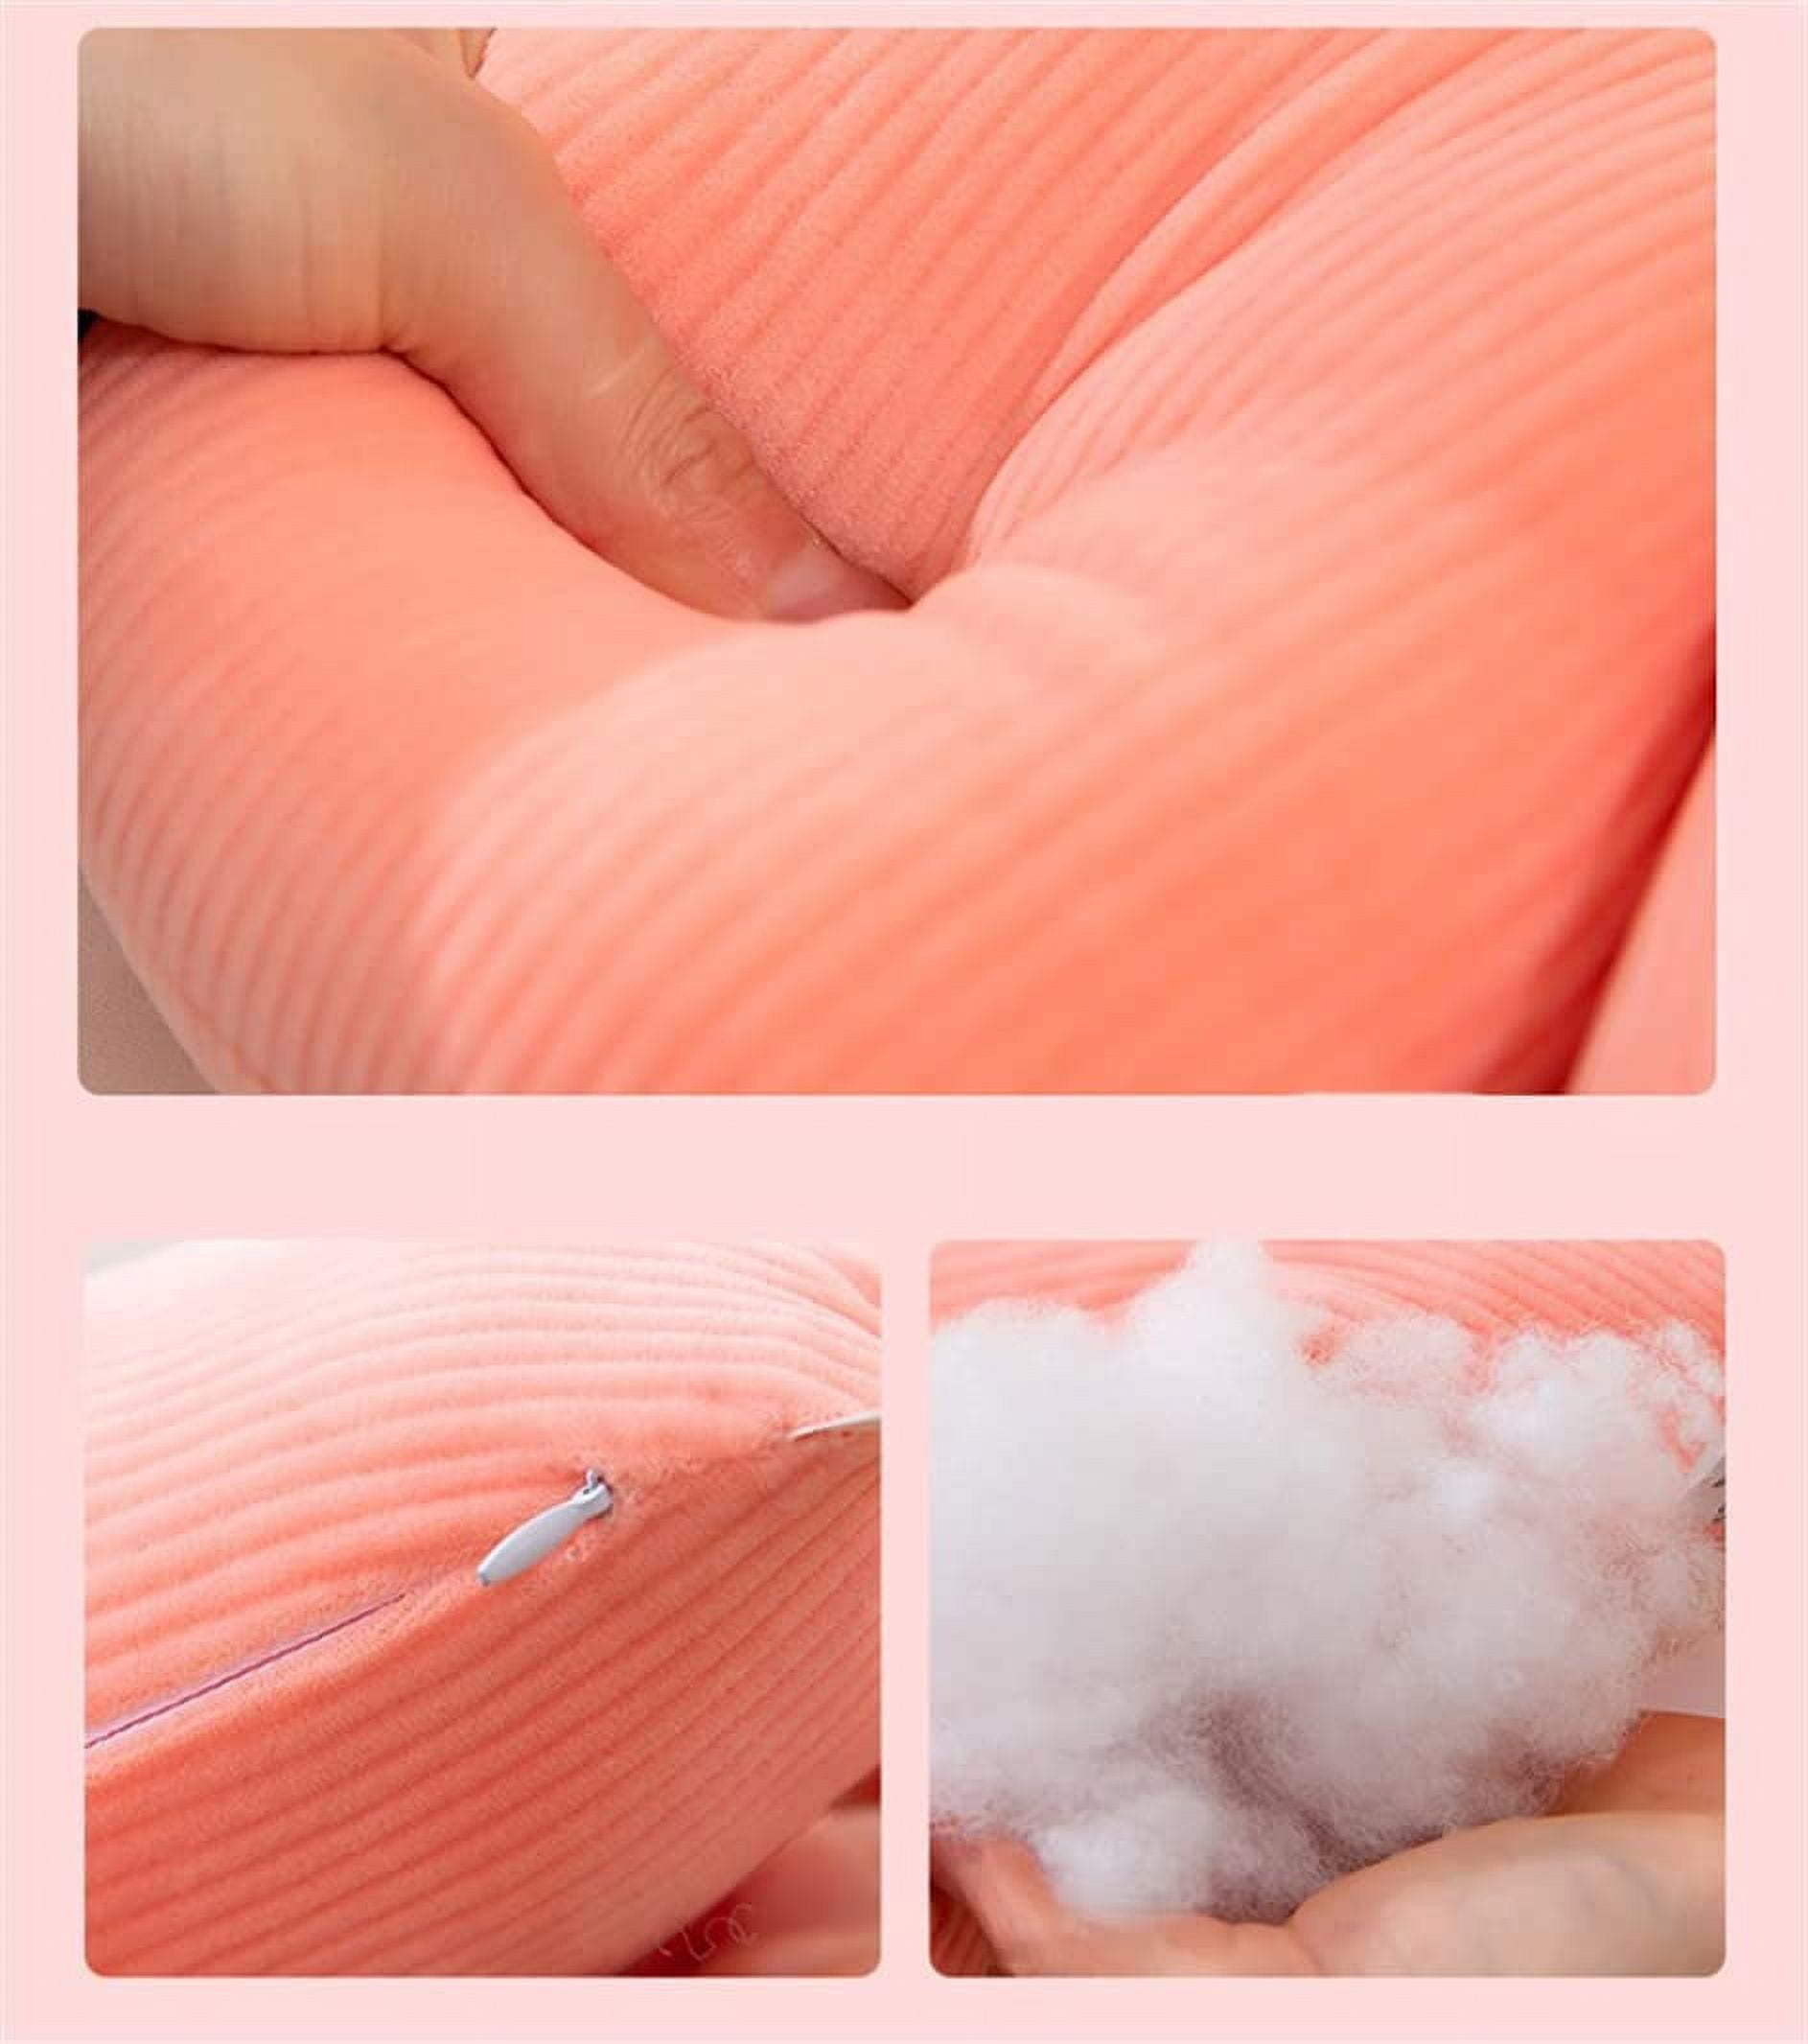 Blush Pink Ikat Lumbar Pillow with Tassels – Concord Pillows